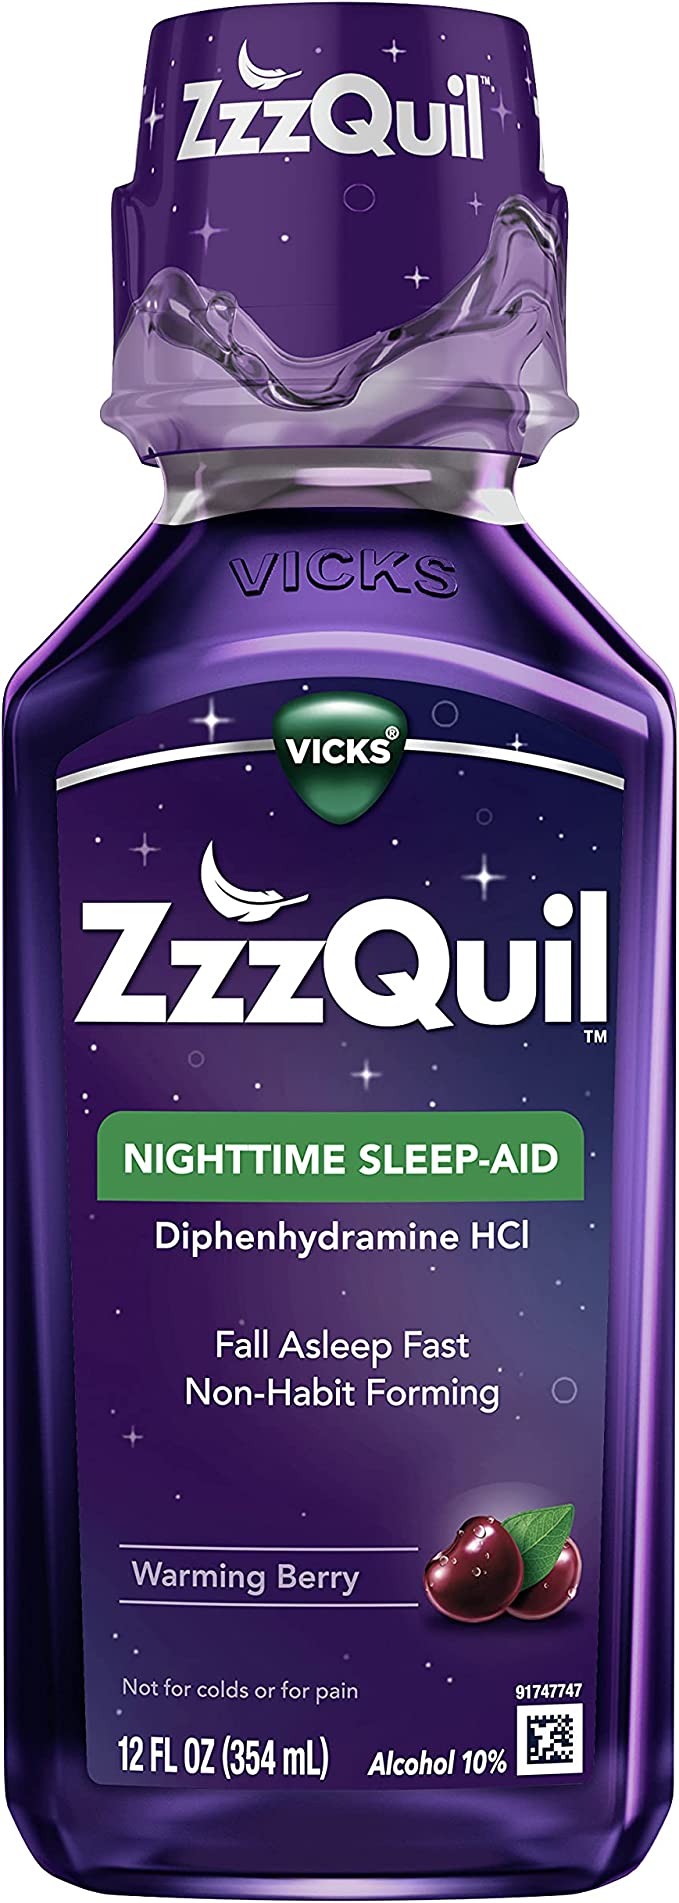 Vicks ZzzQuil, Nighttime Sleep Aid Liquid, 50 mg Diphenhydramine HCl, No.1 Sleep-Aid Brand, Warming Berry Flavor, Non-Habit Forming, 12 FL OZ